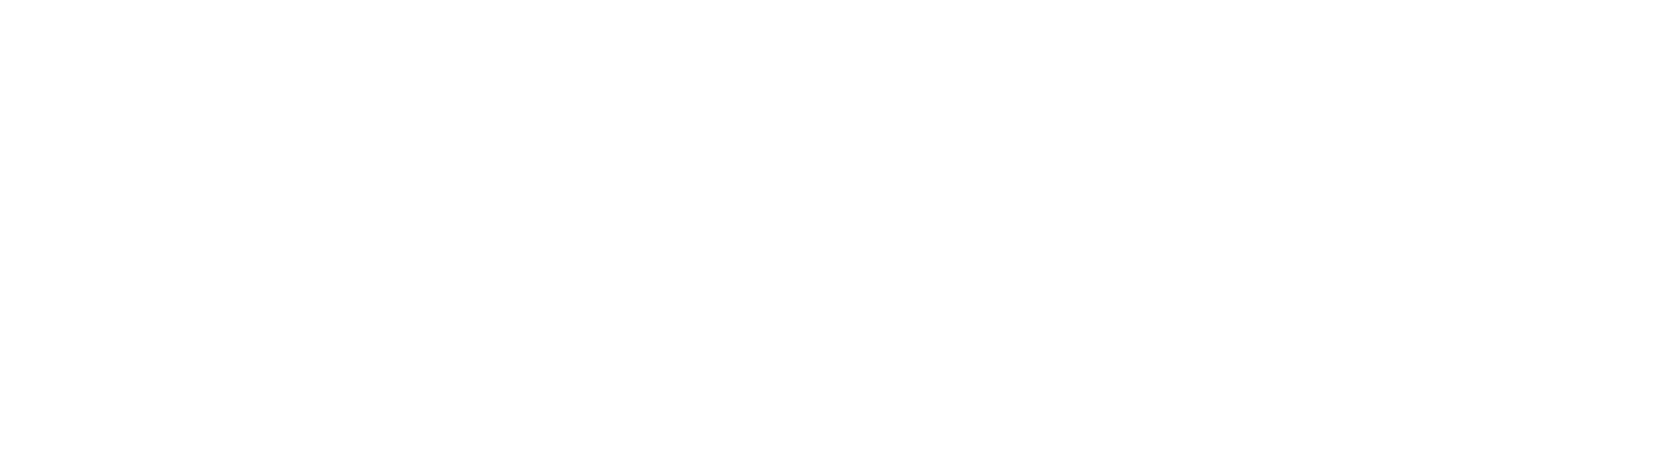 Mexico Hoy